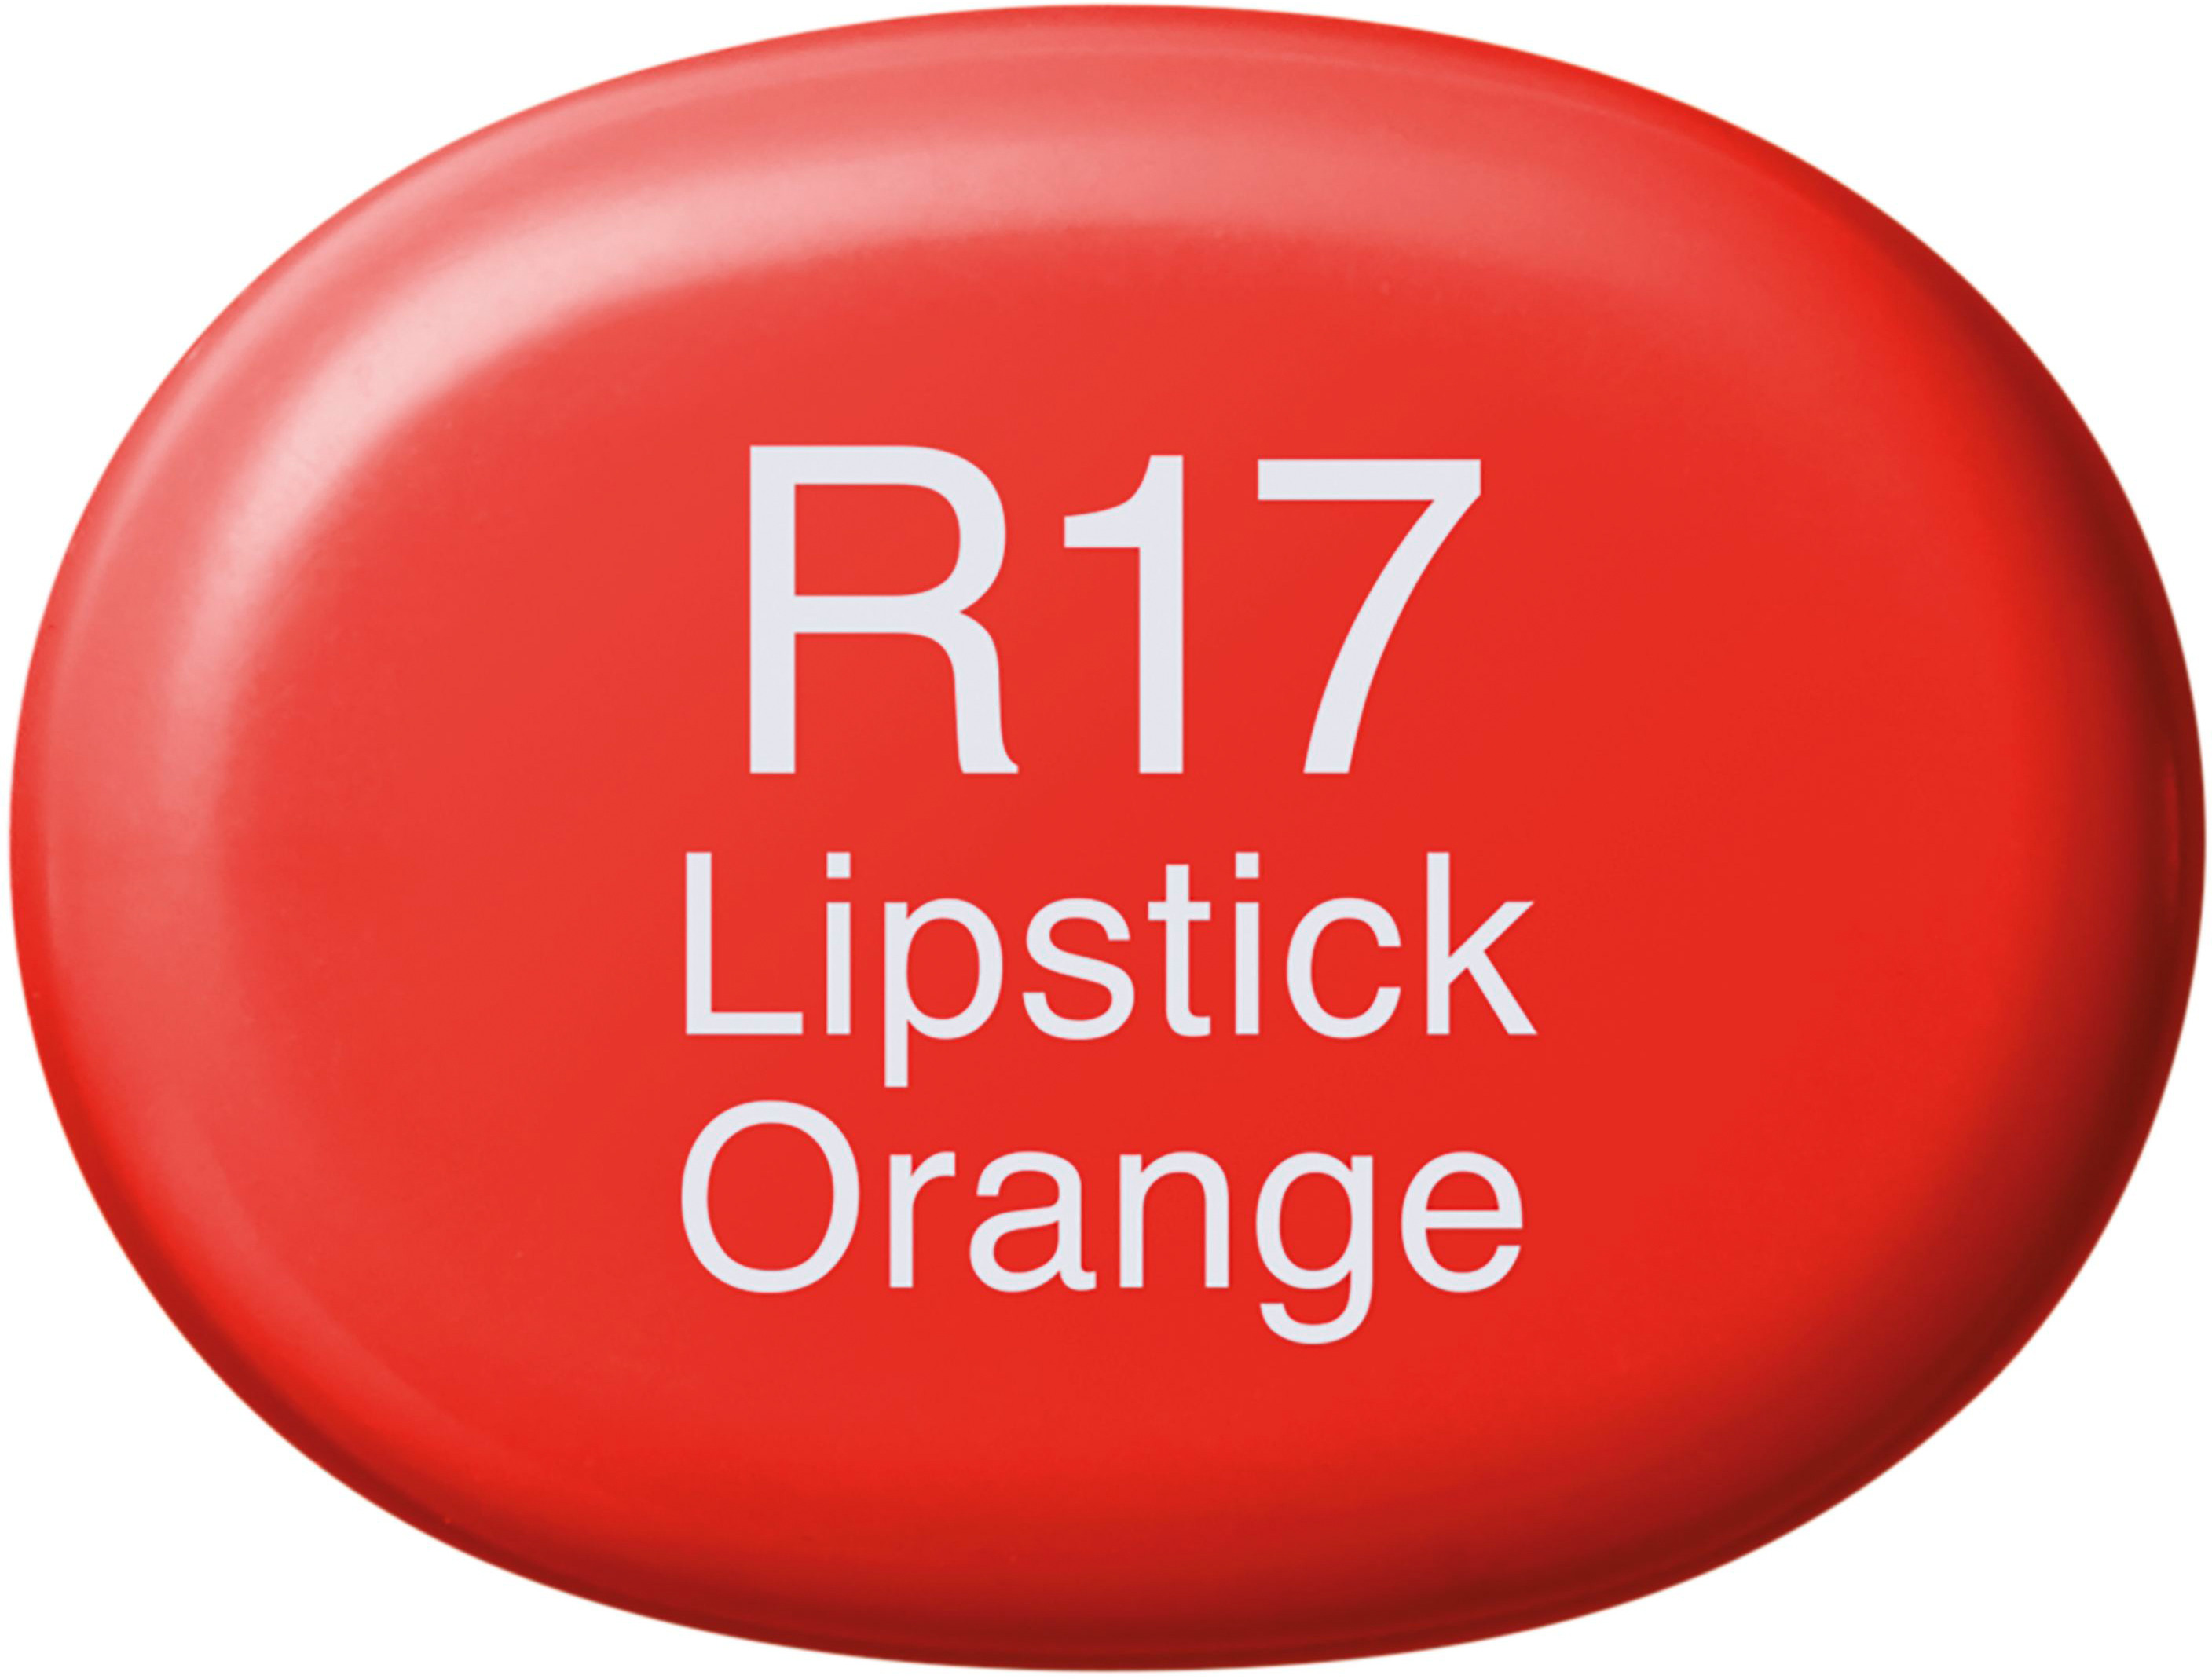 COPIC Marker Sketch 21075126 R17 - Lipstick Orange